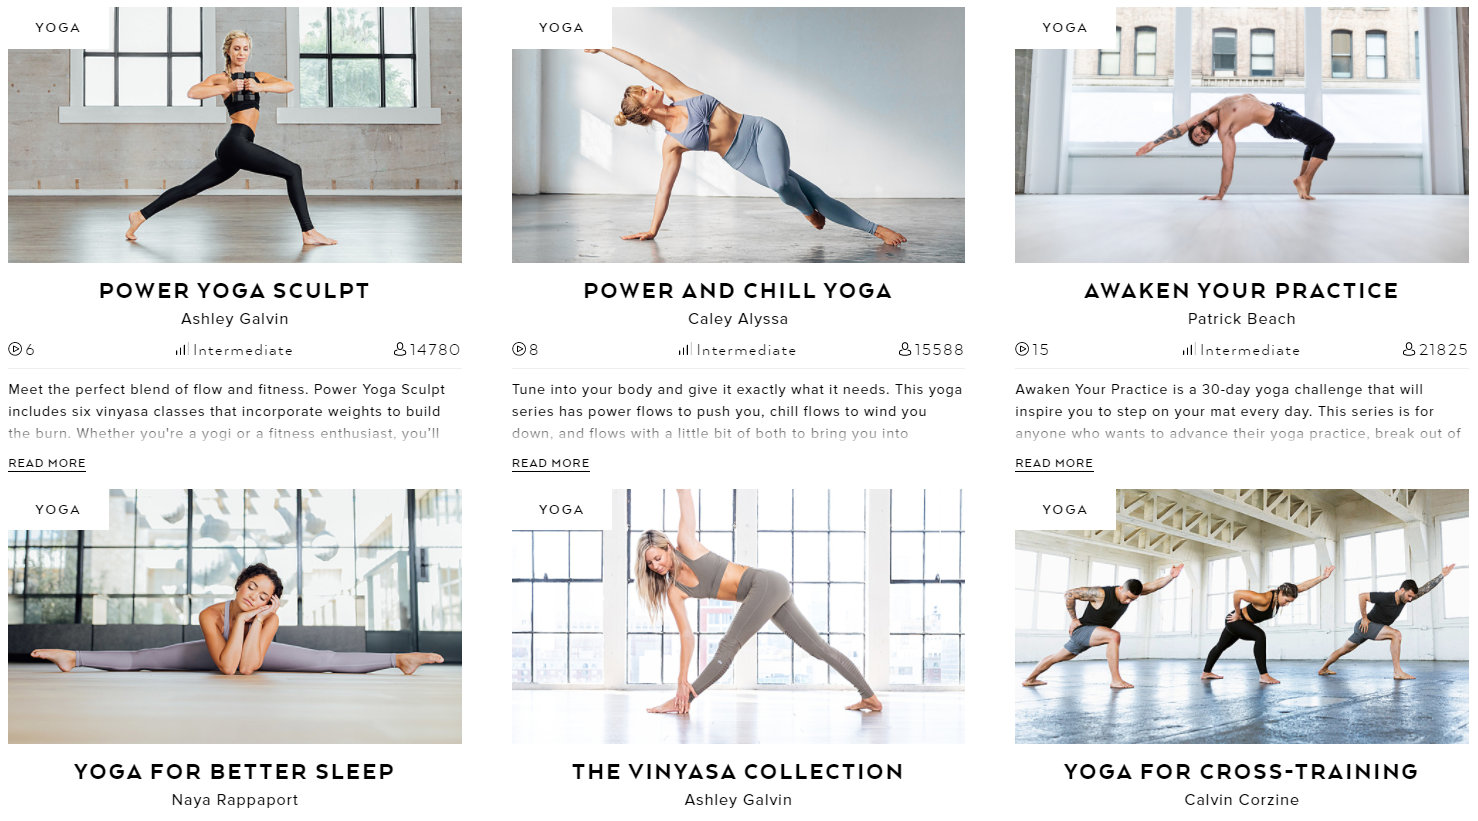 Alo Moves yoga series programs